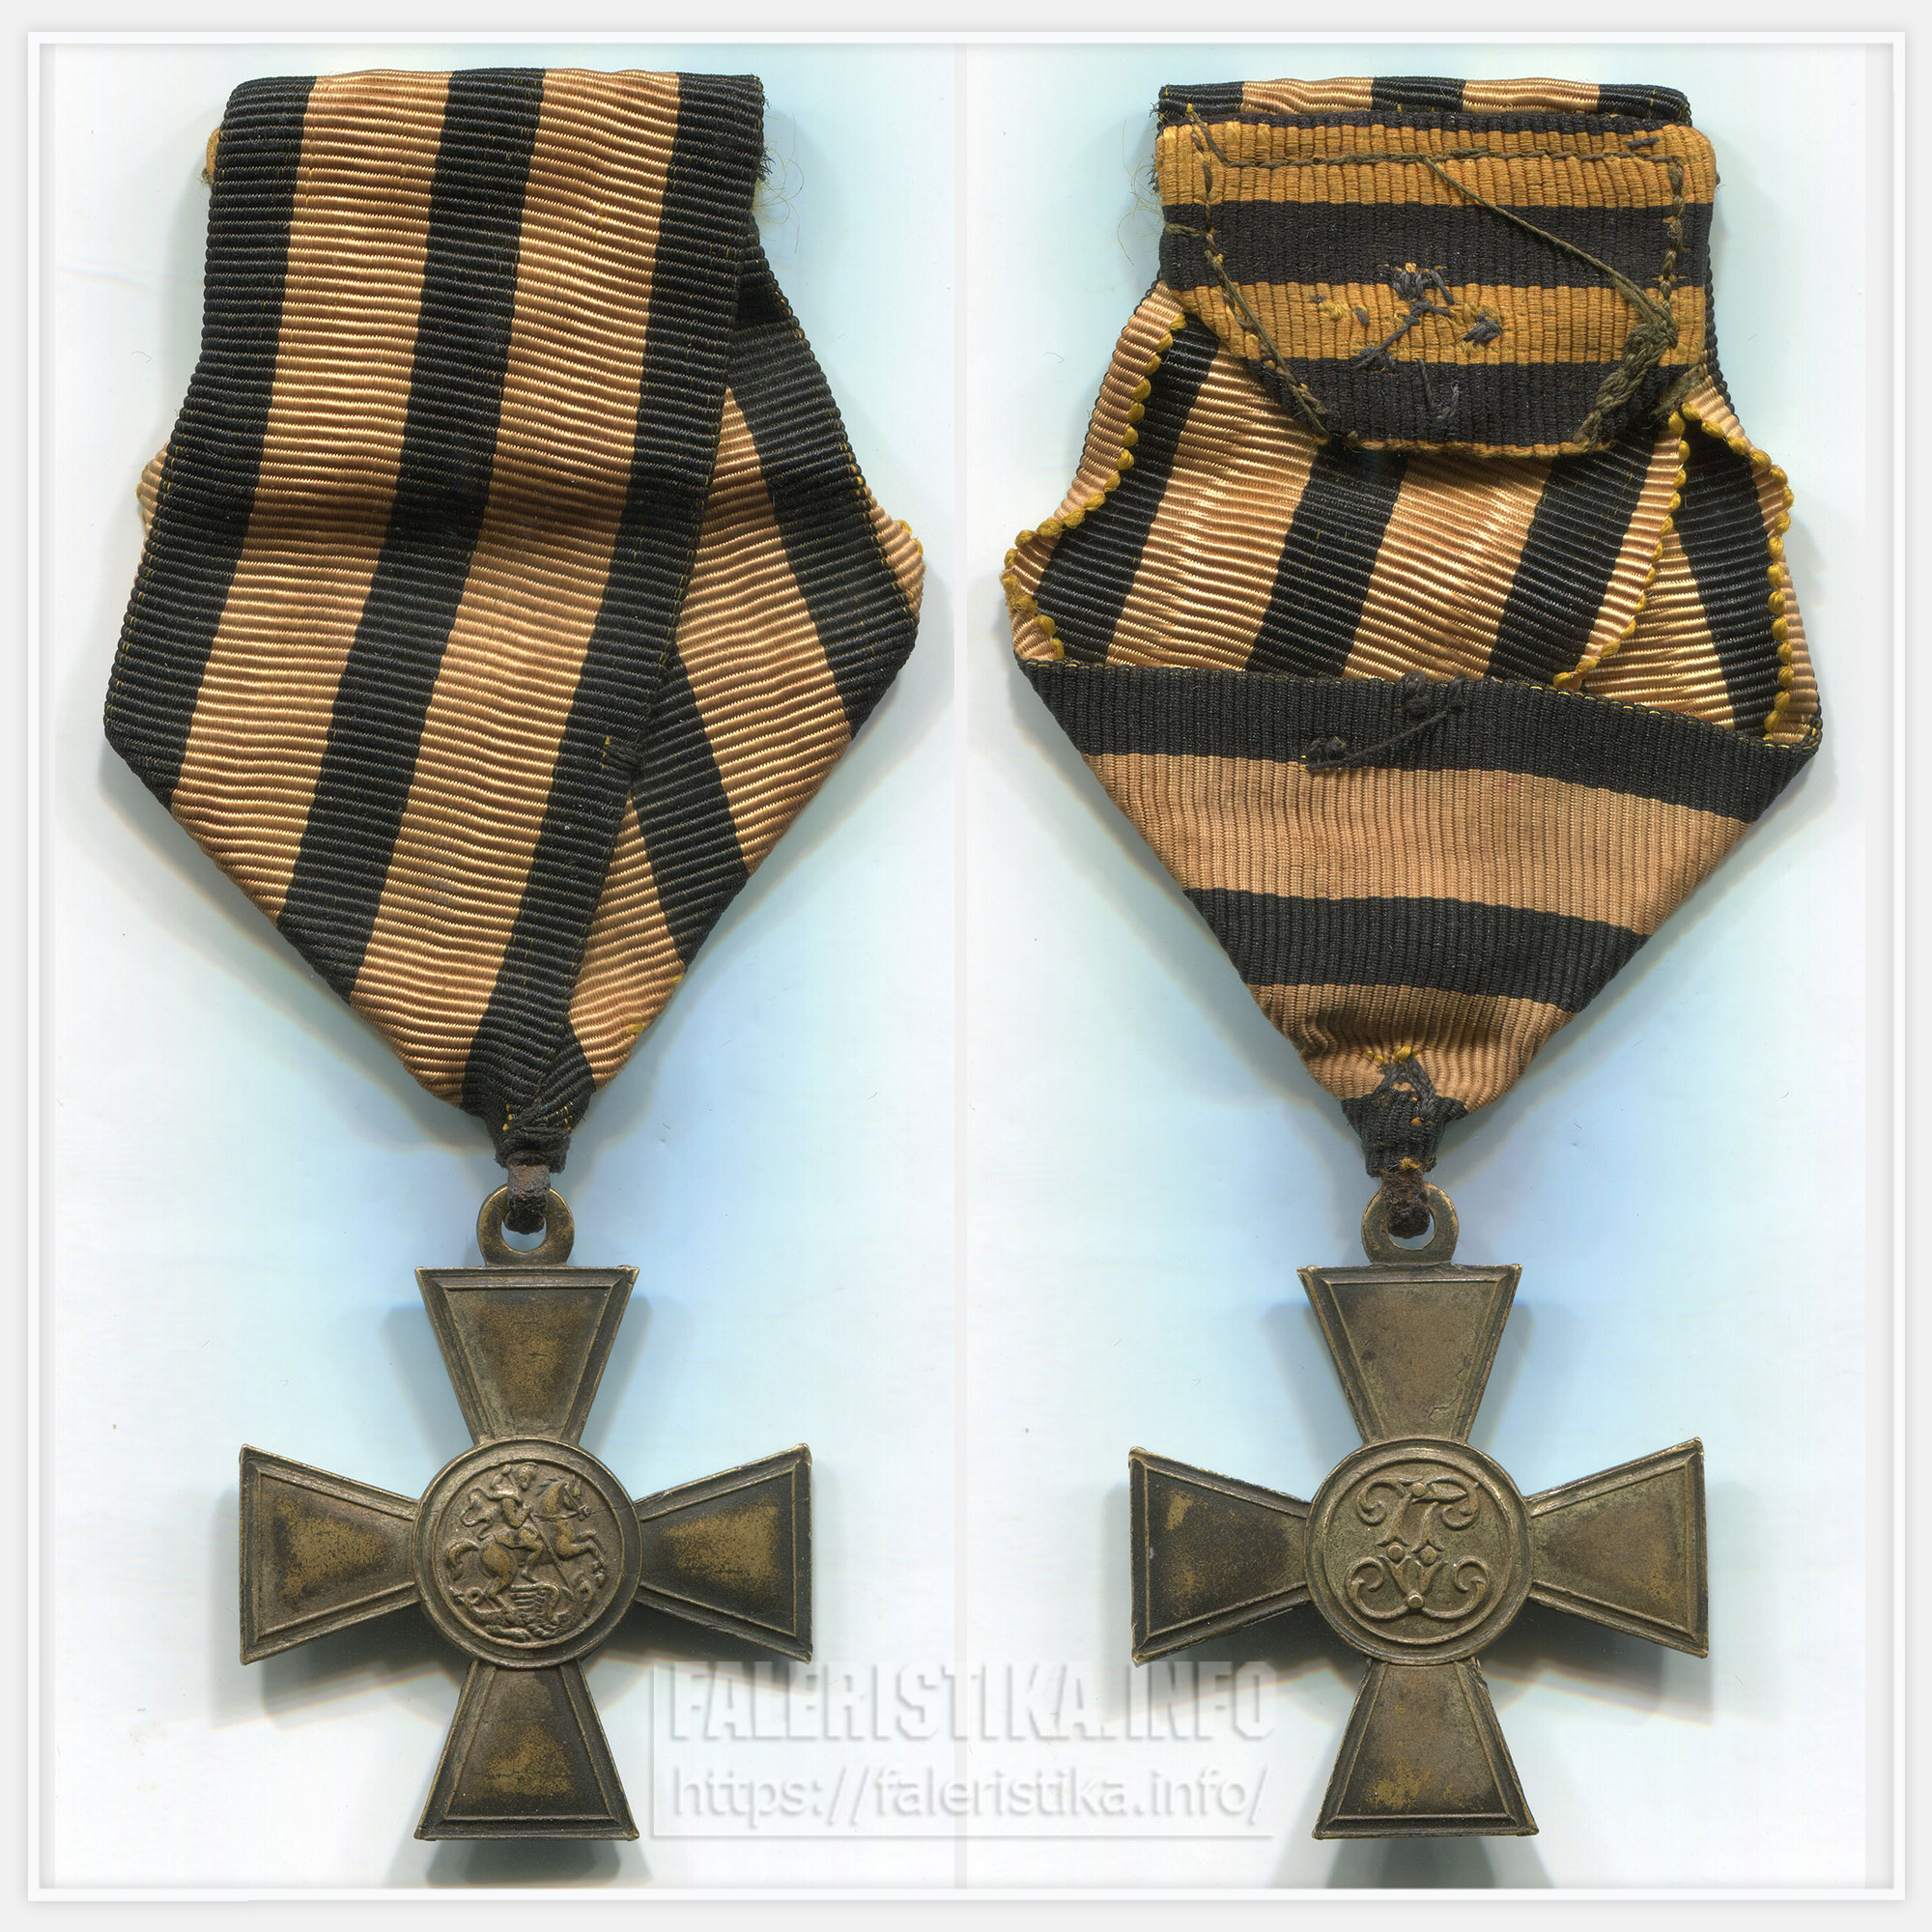 Георгиевский крест 4 ст. (Чехословацкий корпус)Георгиевский крест 4 ст. (Чехословацкий корпус)